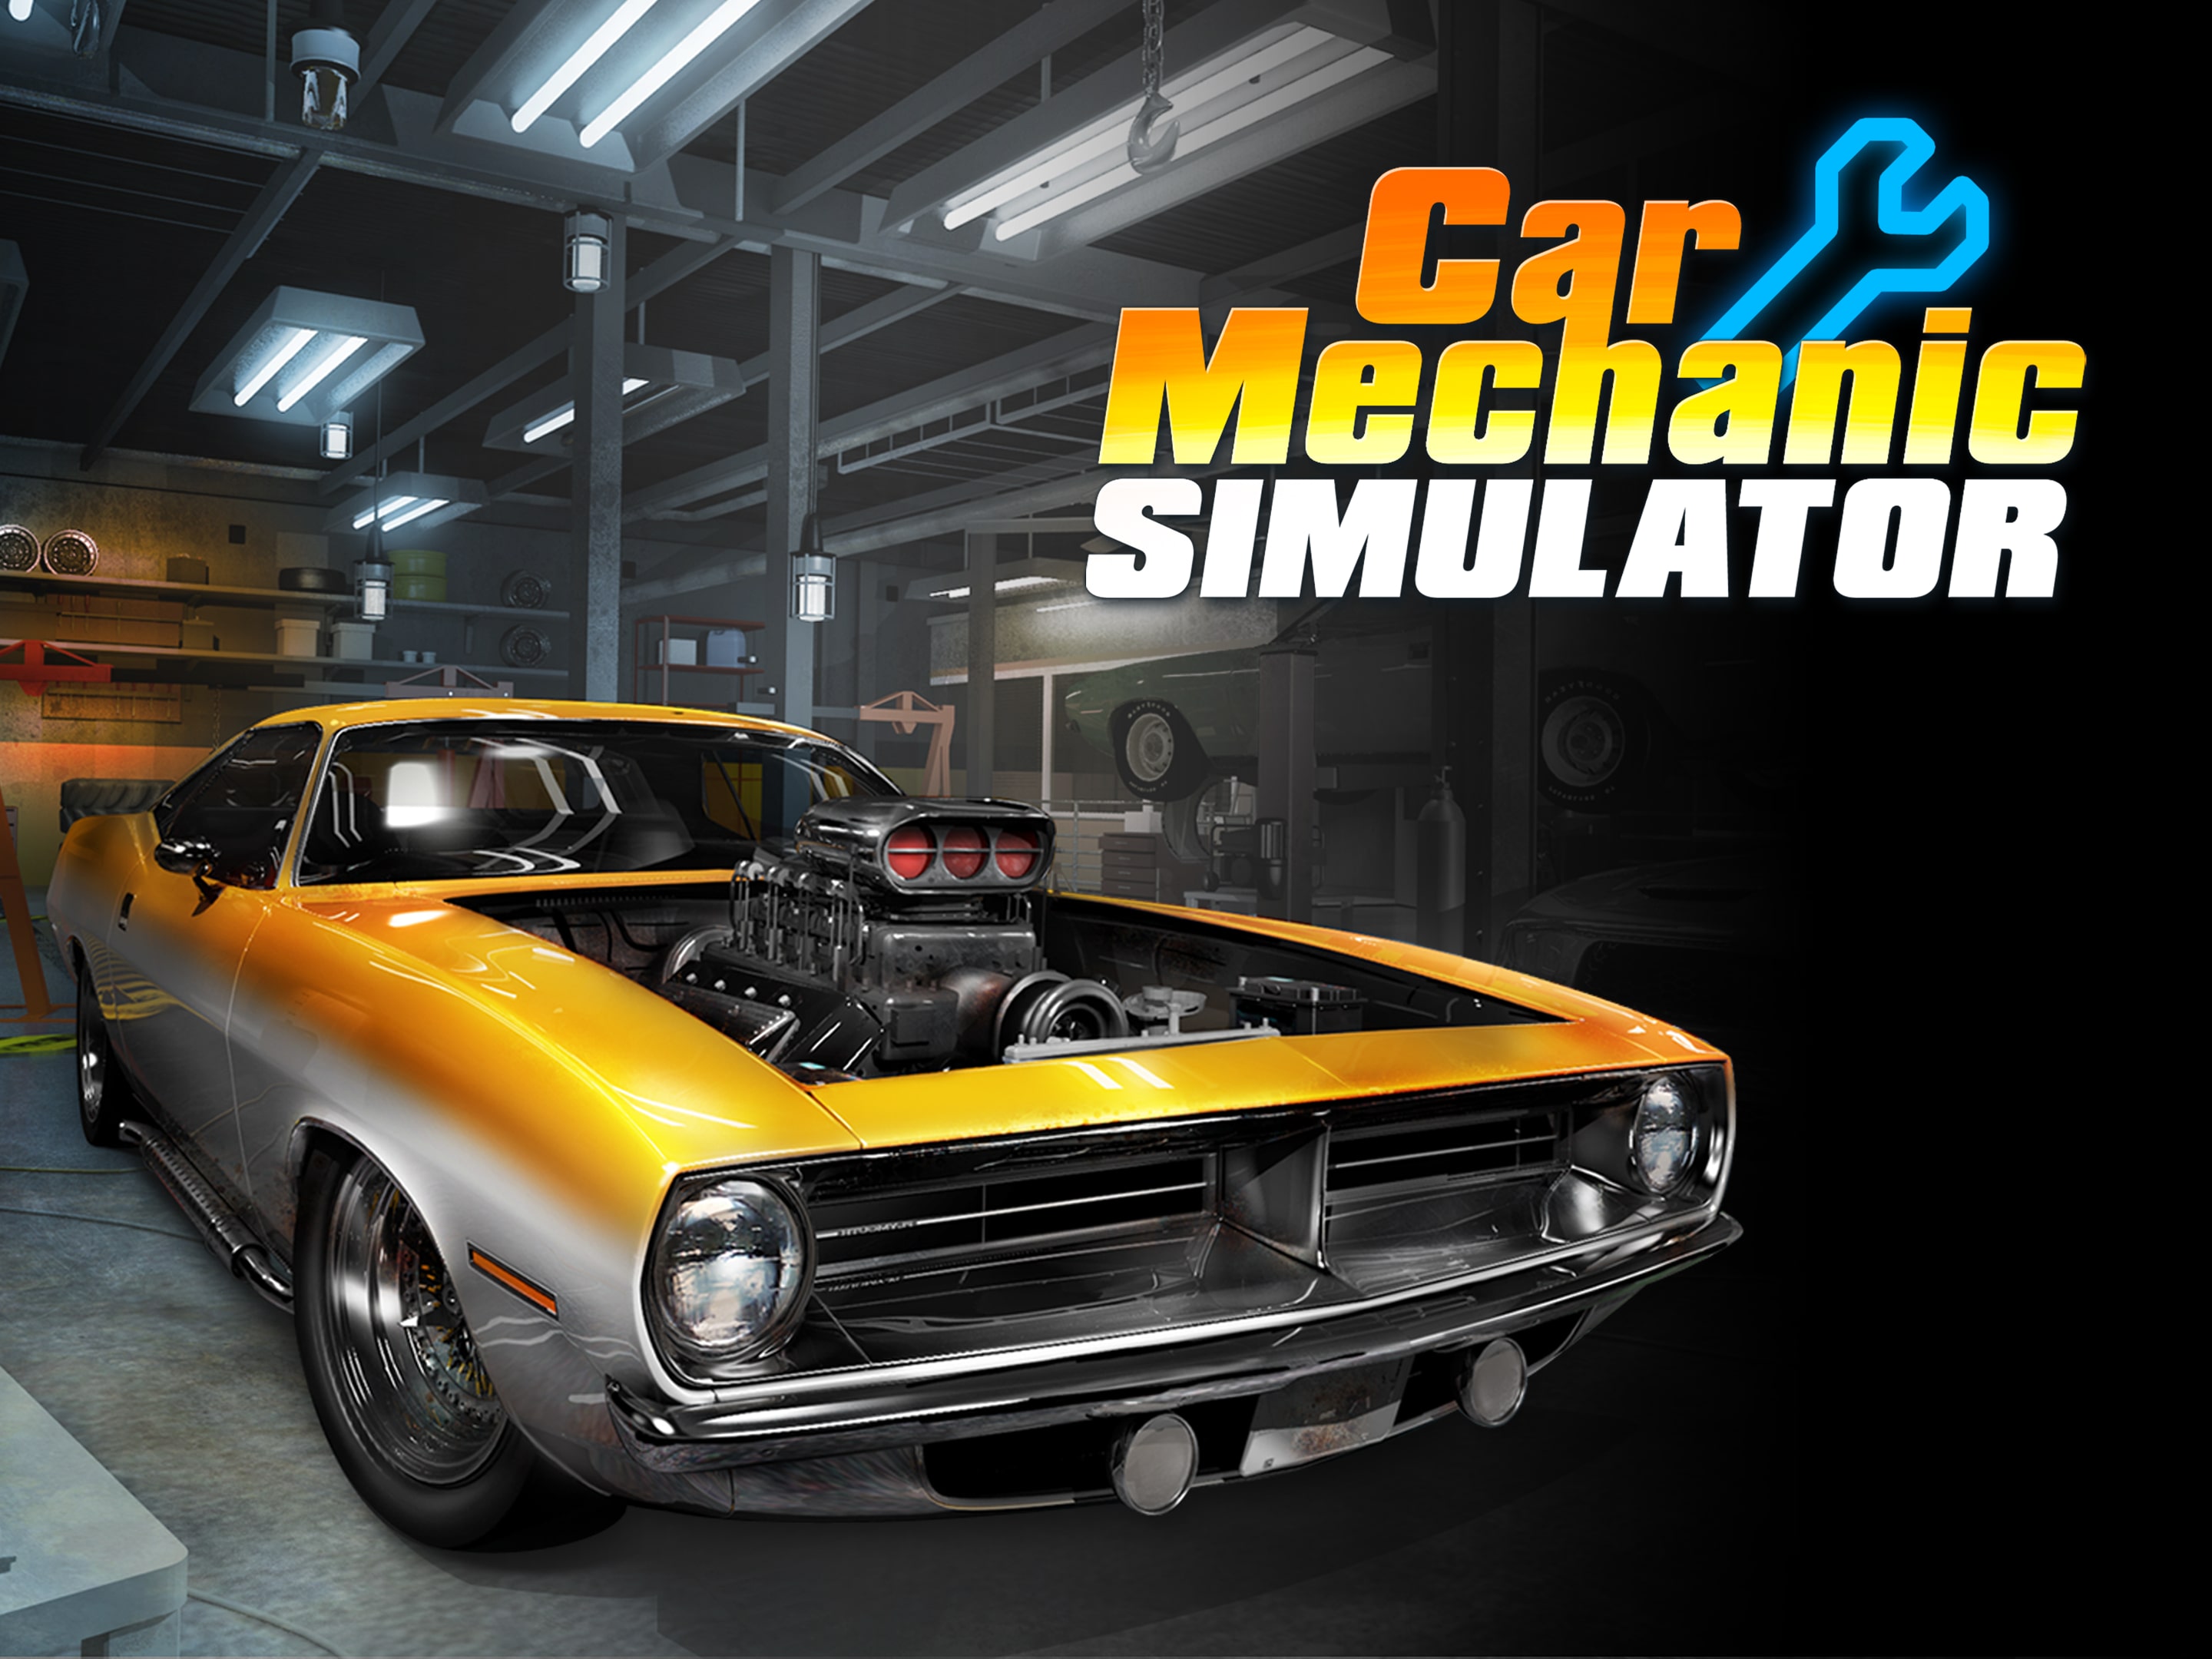 free car mechanic simulator 2018 iso download